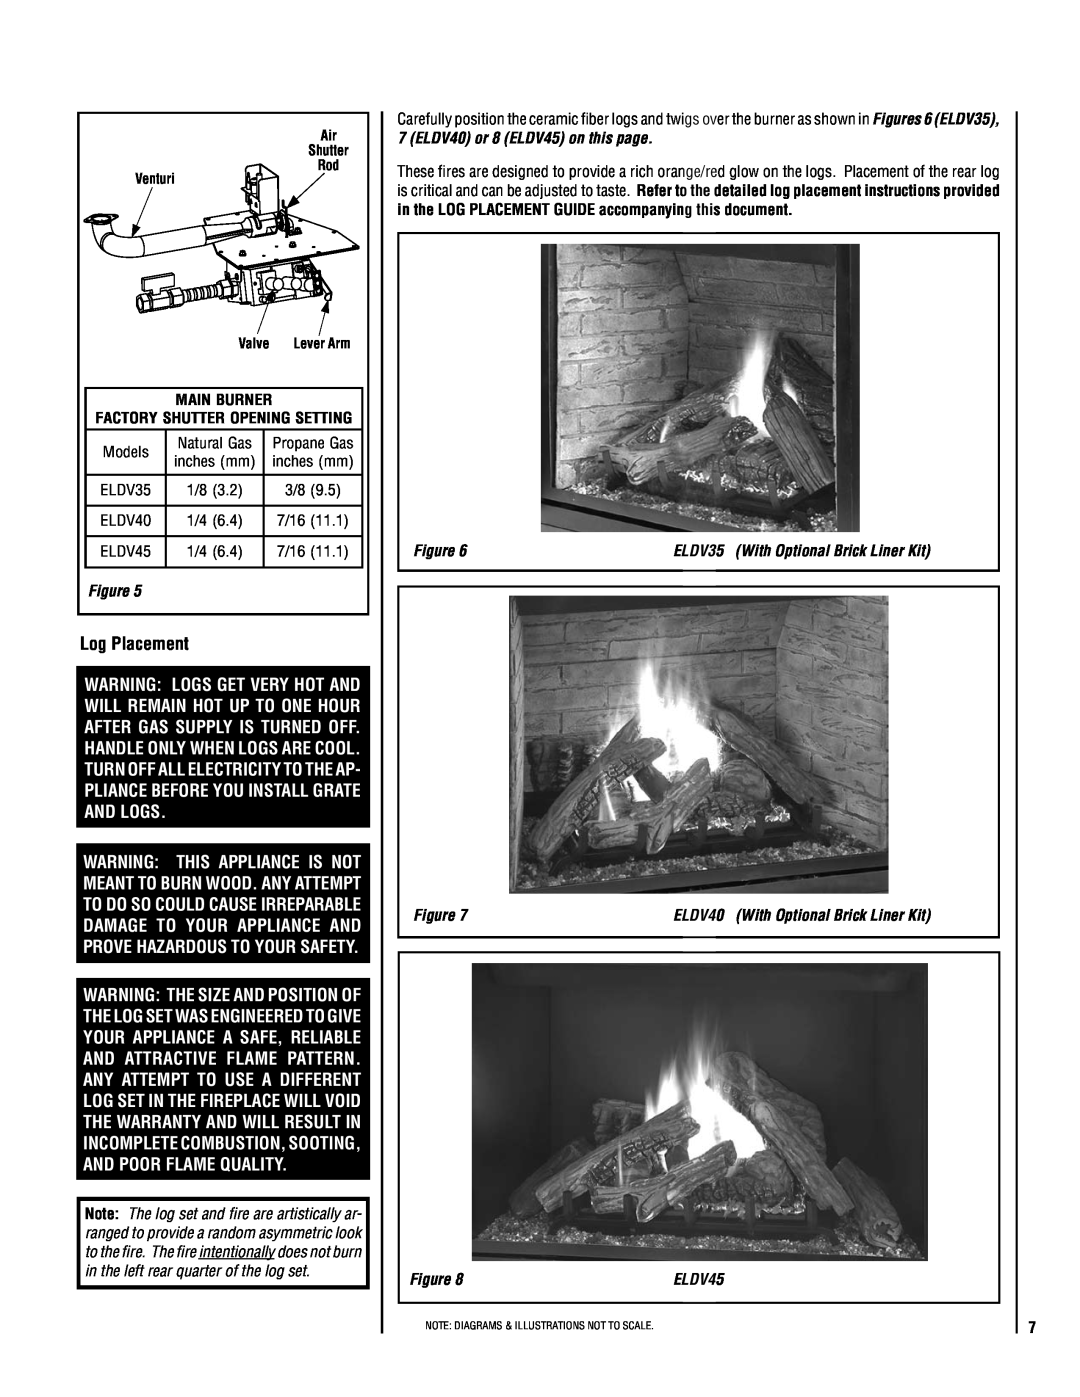 Lennox Hearth EN04-VDLE, MN04-VDLE Log Placement, ELDV40 or 8 ELDV45 on this page, ELDV35 With Optional Brick Liner Kit 